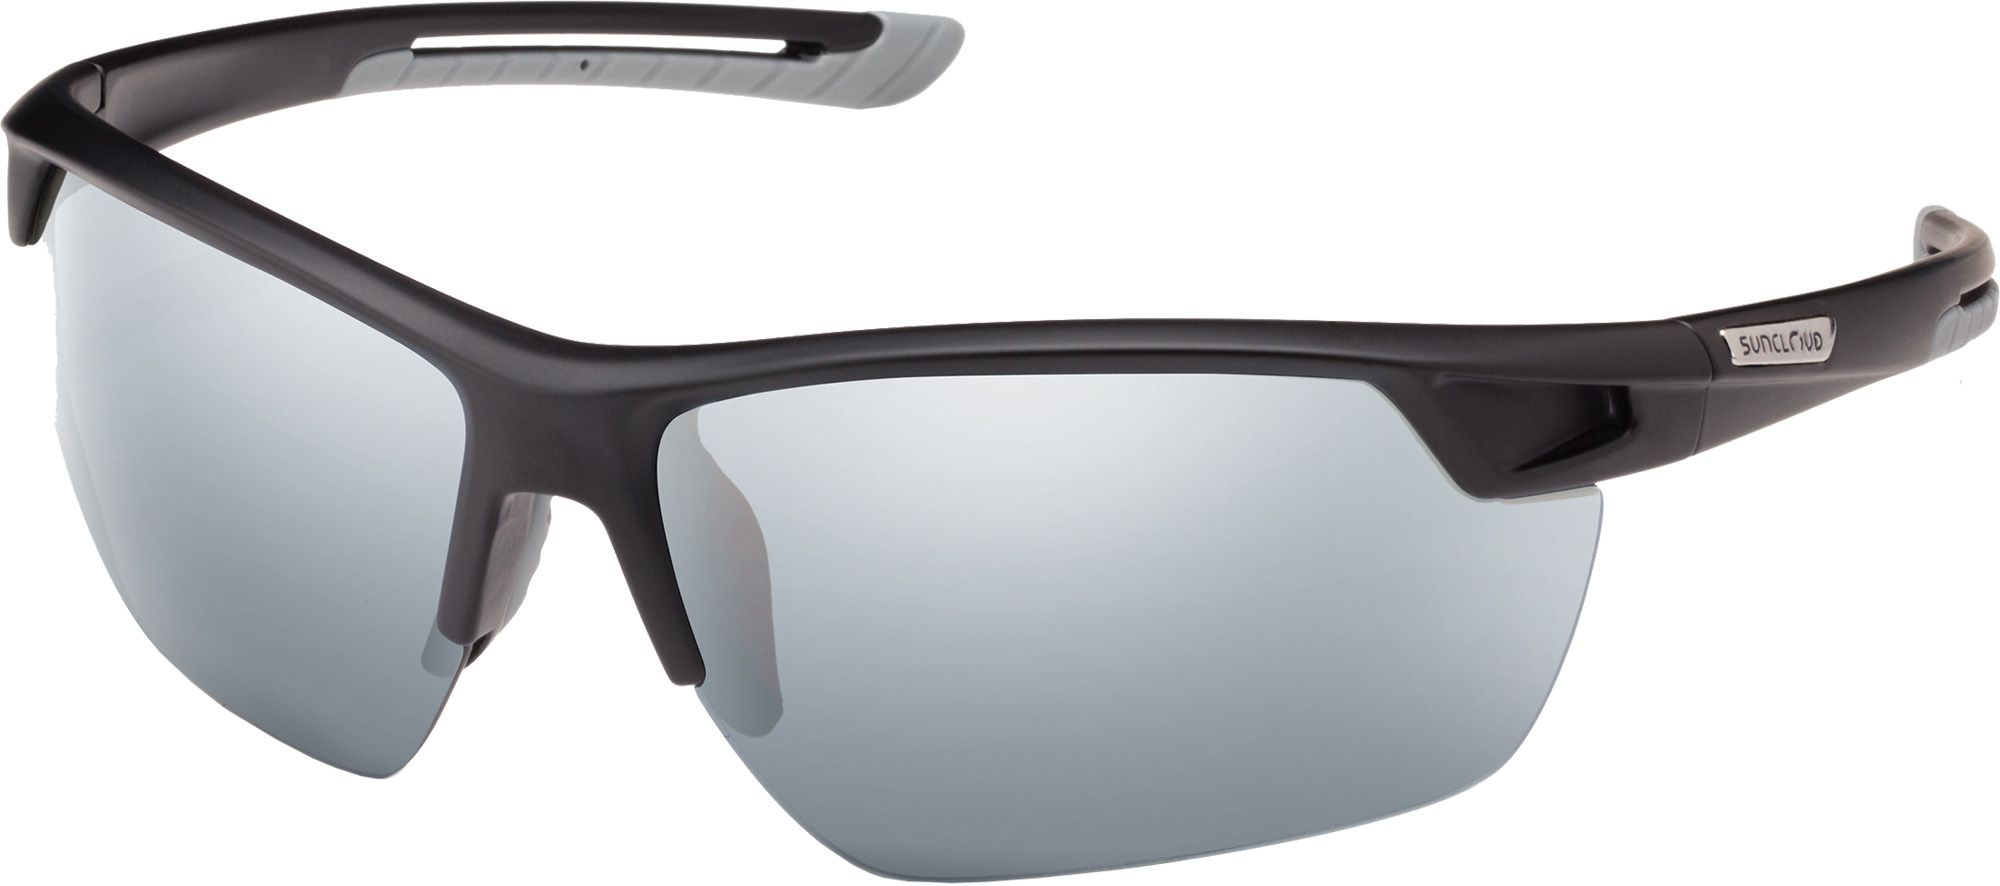 Photos - Sunglasses Suncloud Optics Contender Polarized , Men's, Black/Silver 19AF9A